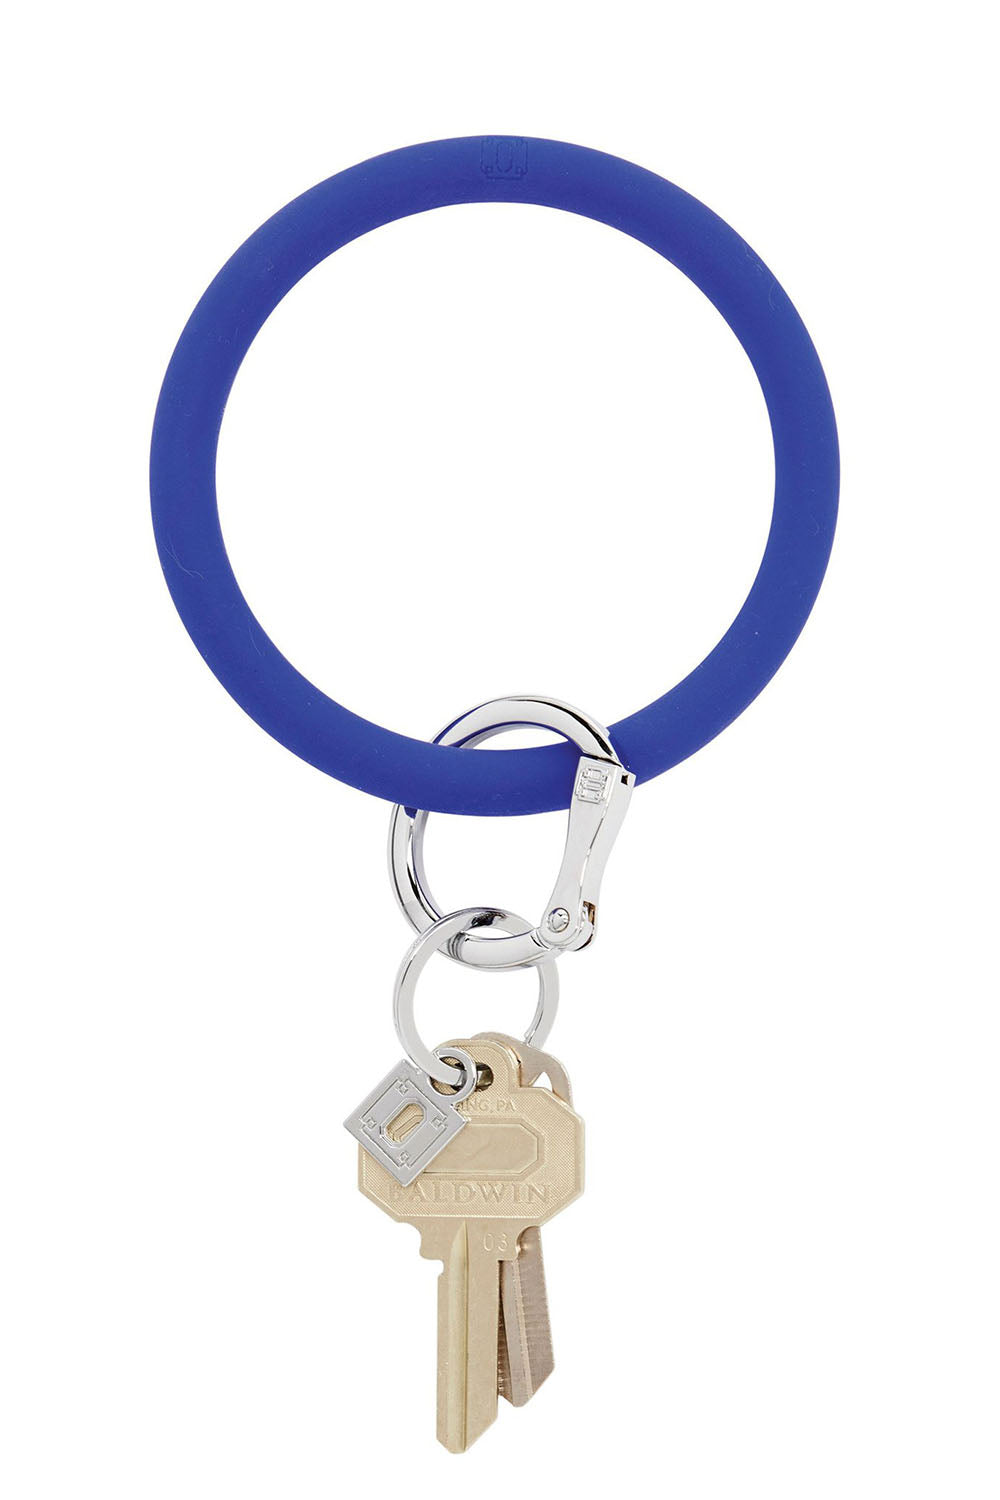 Silicone Big O Key Ring - Solid Blue Me Away